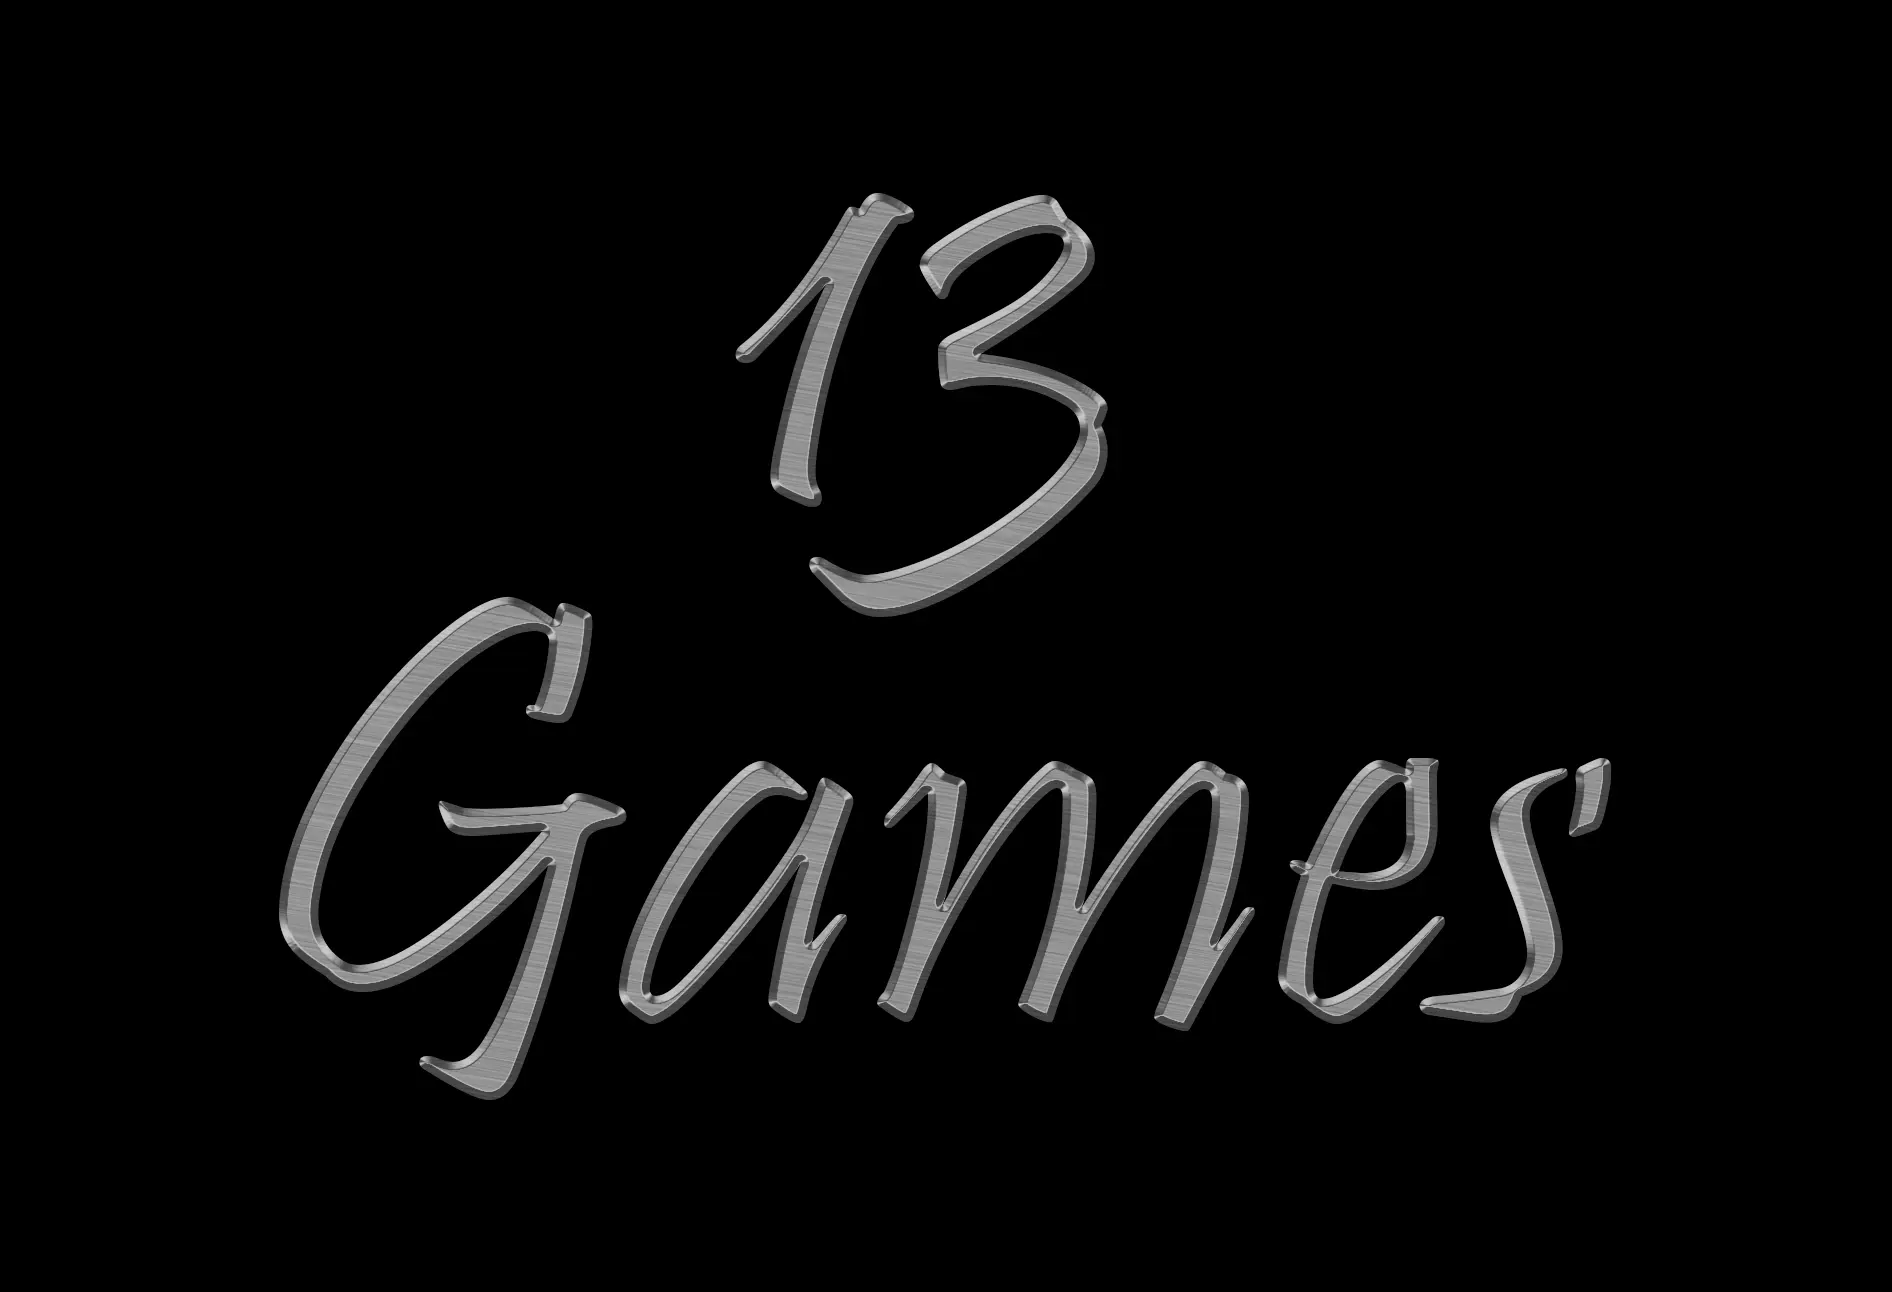 13 Games' Project Sampler main image